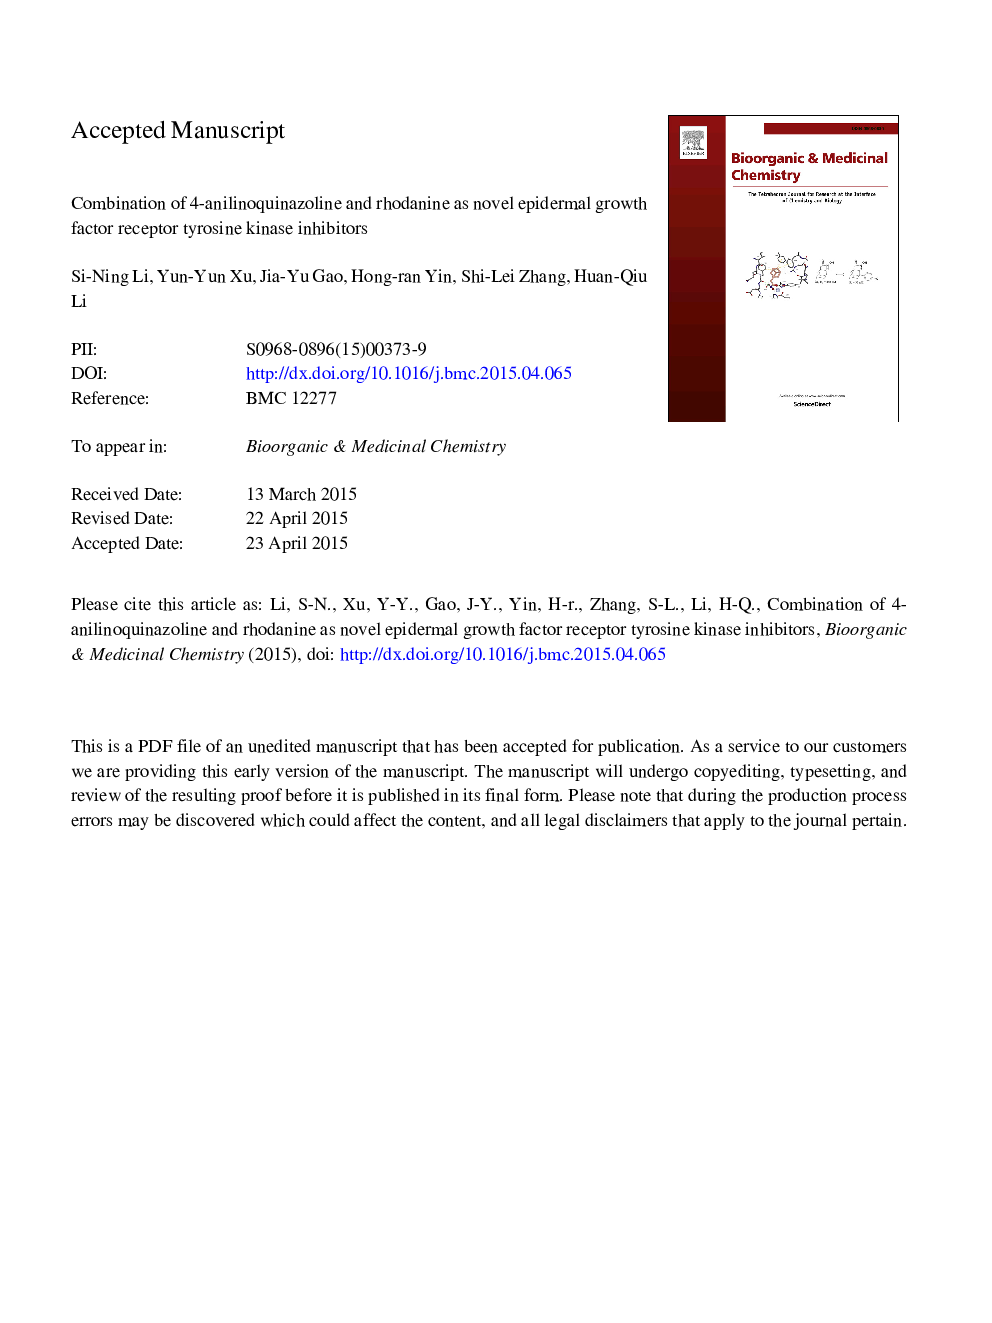 Combination of 4-anilinoquinazoline and rhodanine as novel epidermal growth factor receptor tyrosine kinase inhibitors